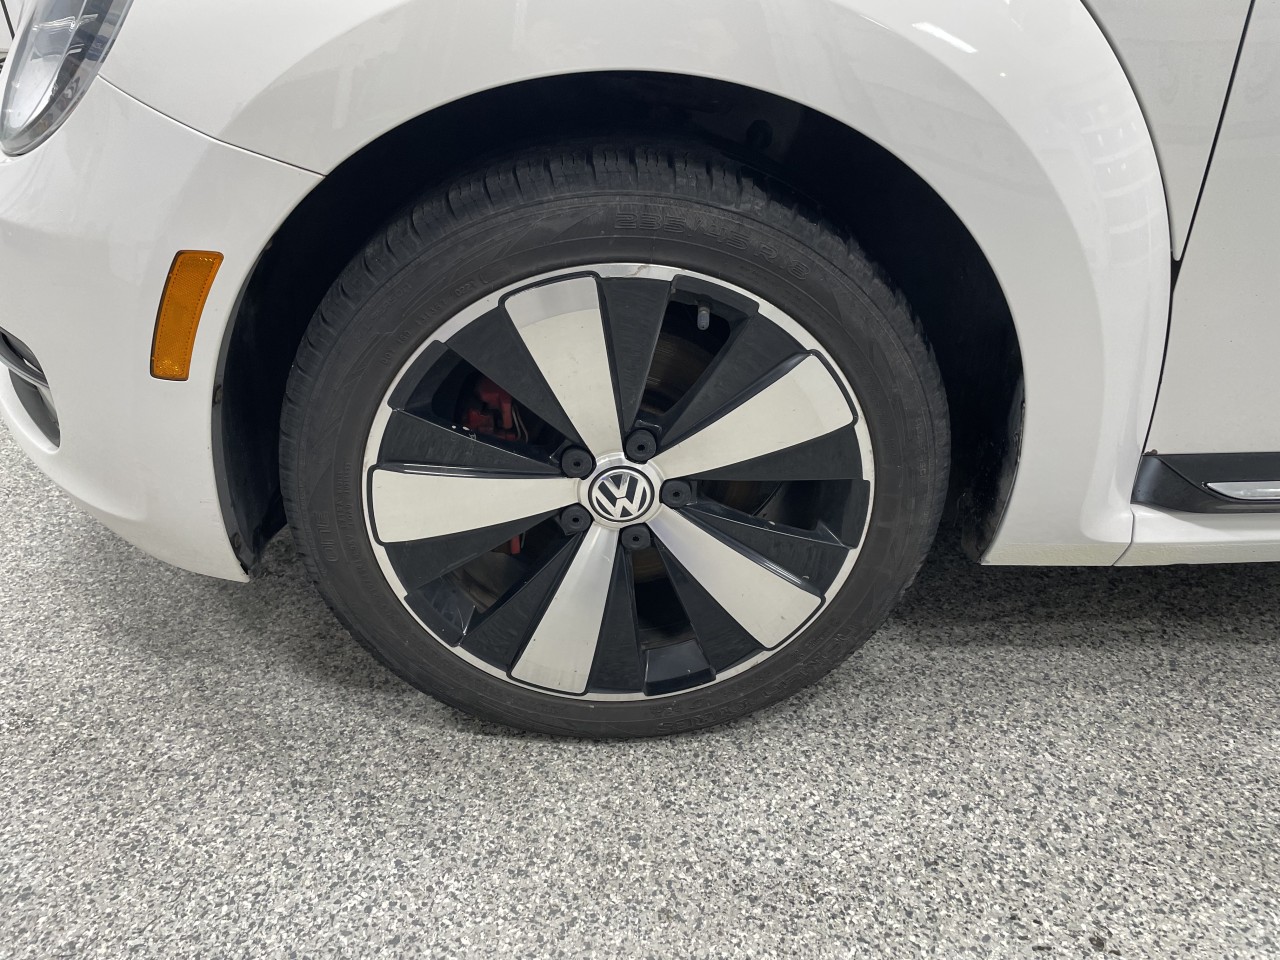 2013 Volkswagen Beetle Coupe 2.0T Turbo Image principale